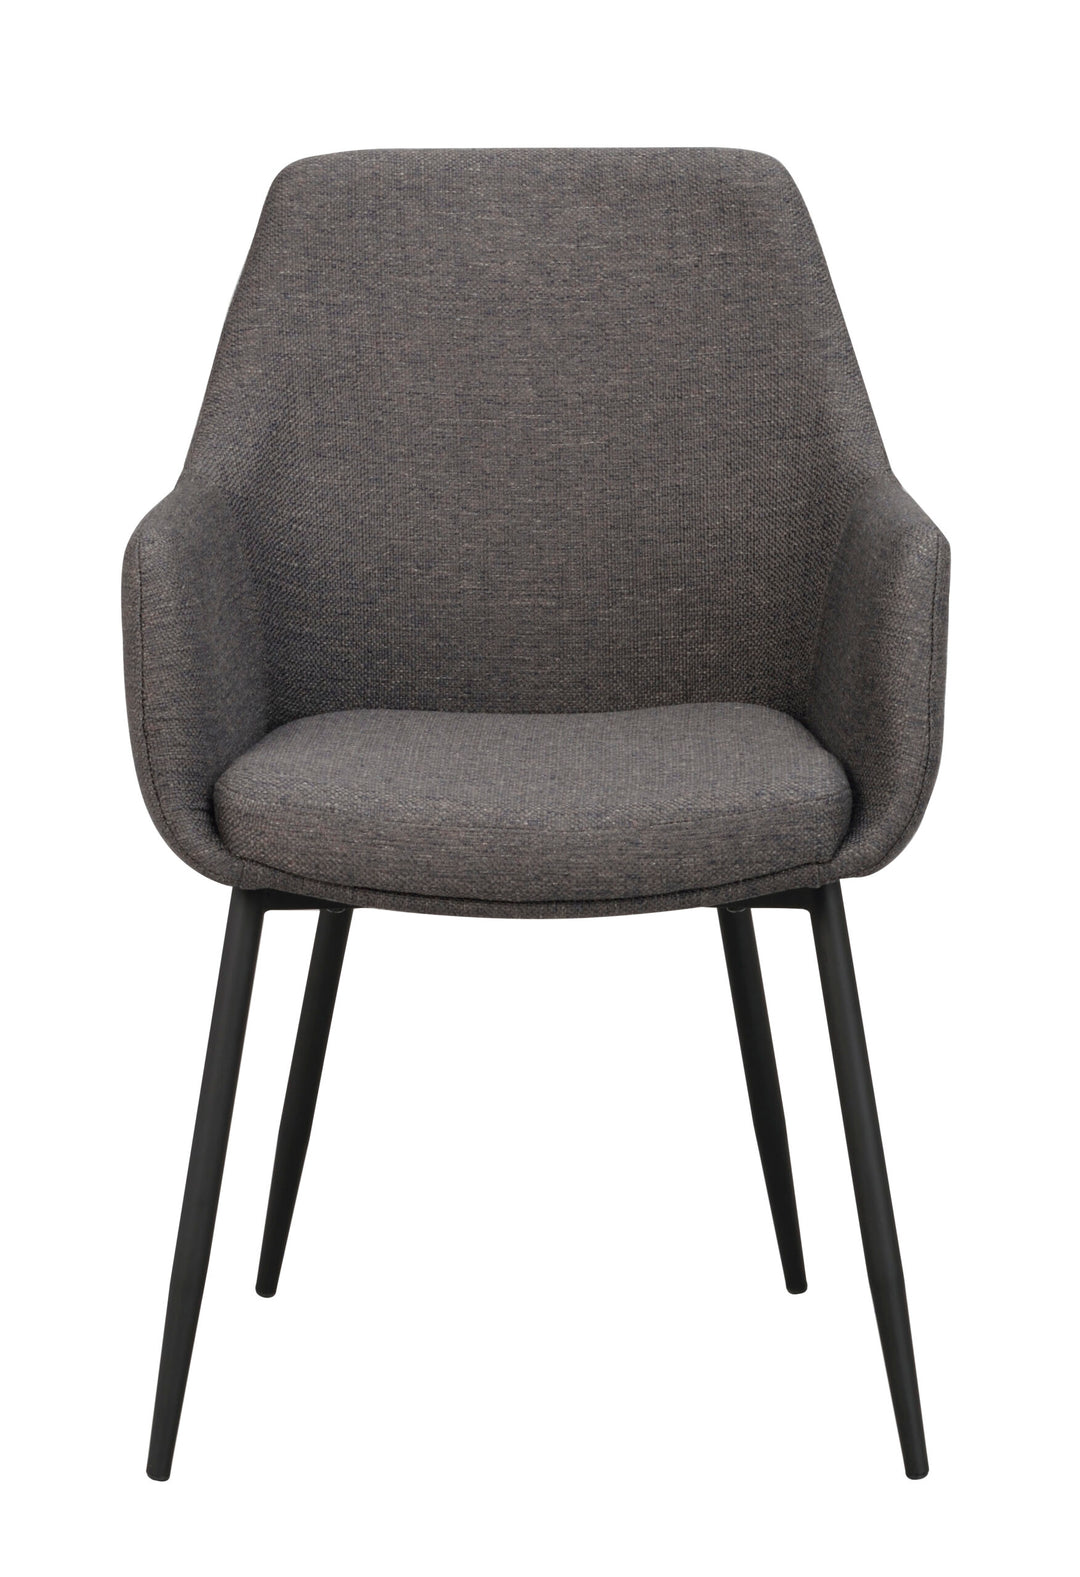 110458_a, Reily arm chair, grey fabric_black